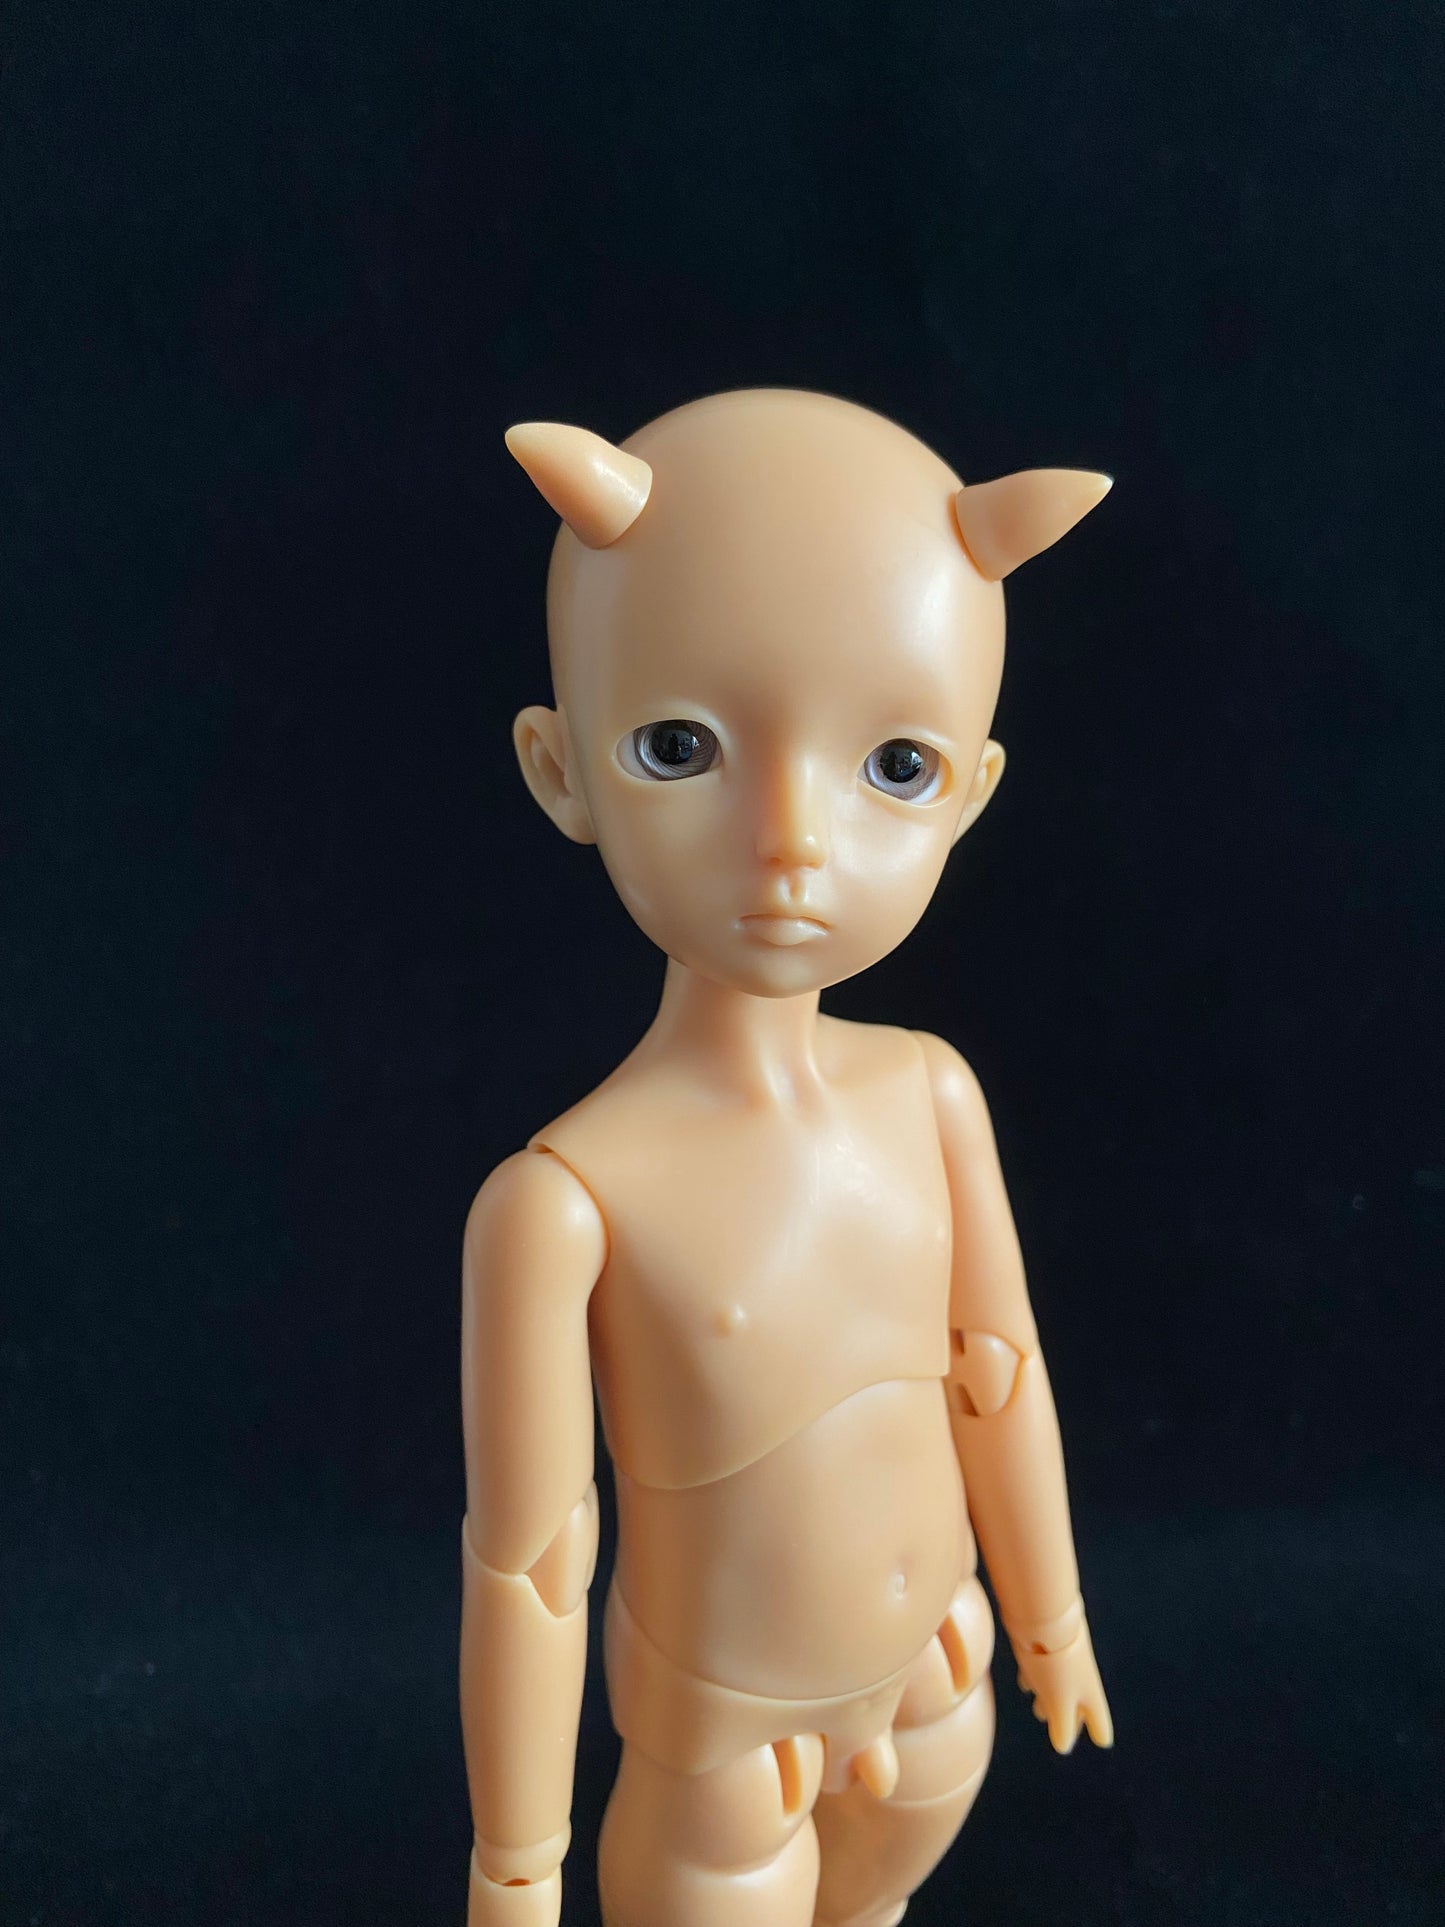 1/6 boy doll Bi Bi in tan skin without makeup